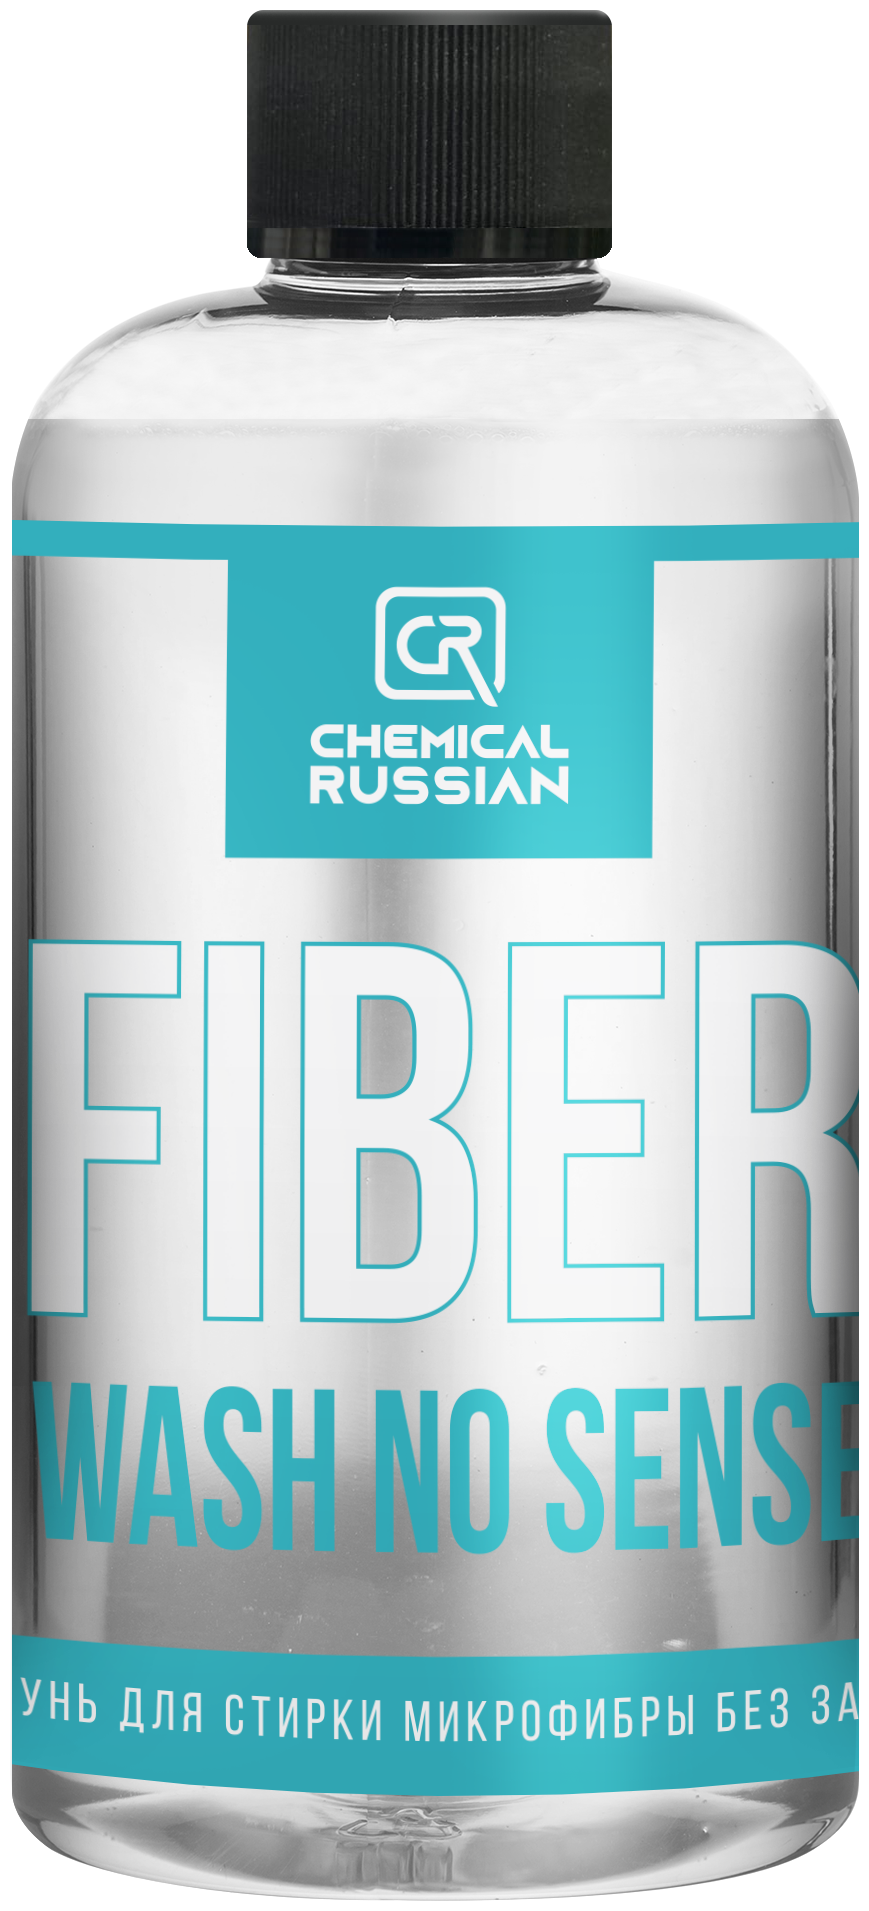 Fiber Wash NO SENSE - Шампунь для стирки микрофибр, 500 мл, Chemical Russian